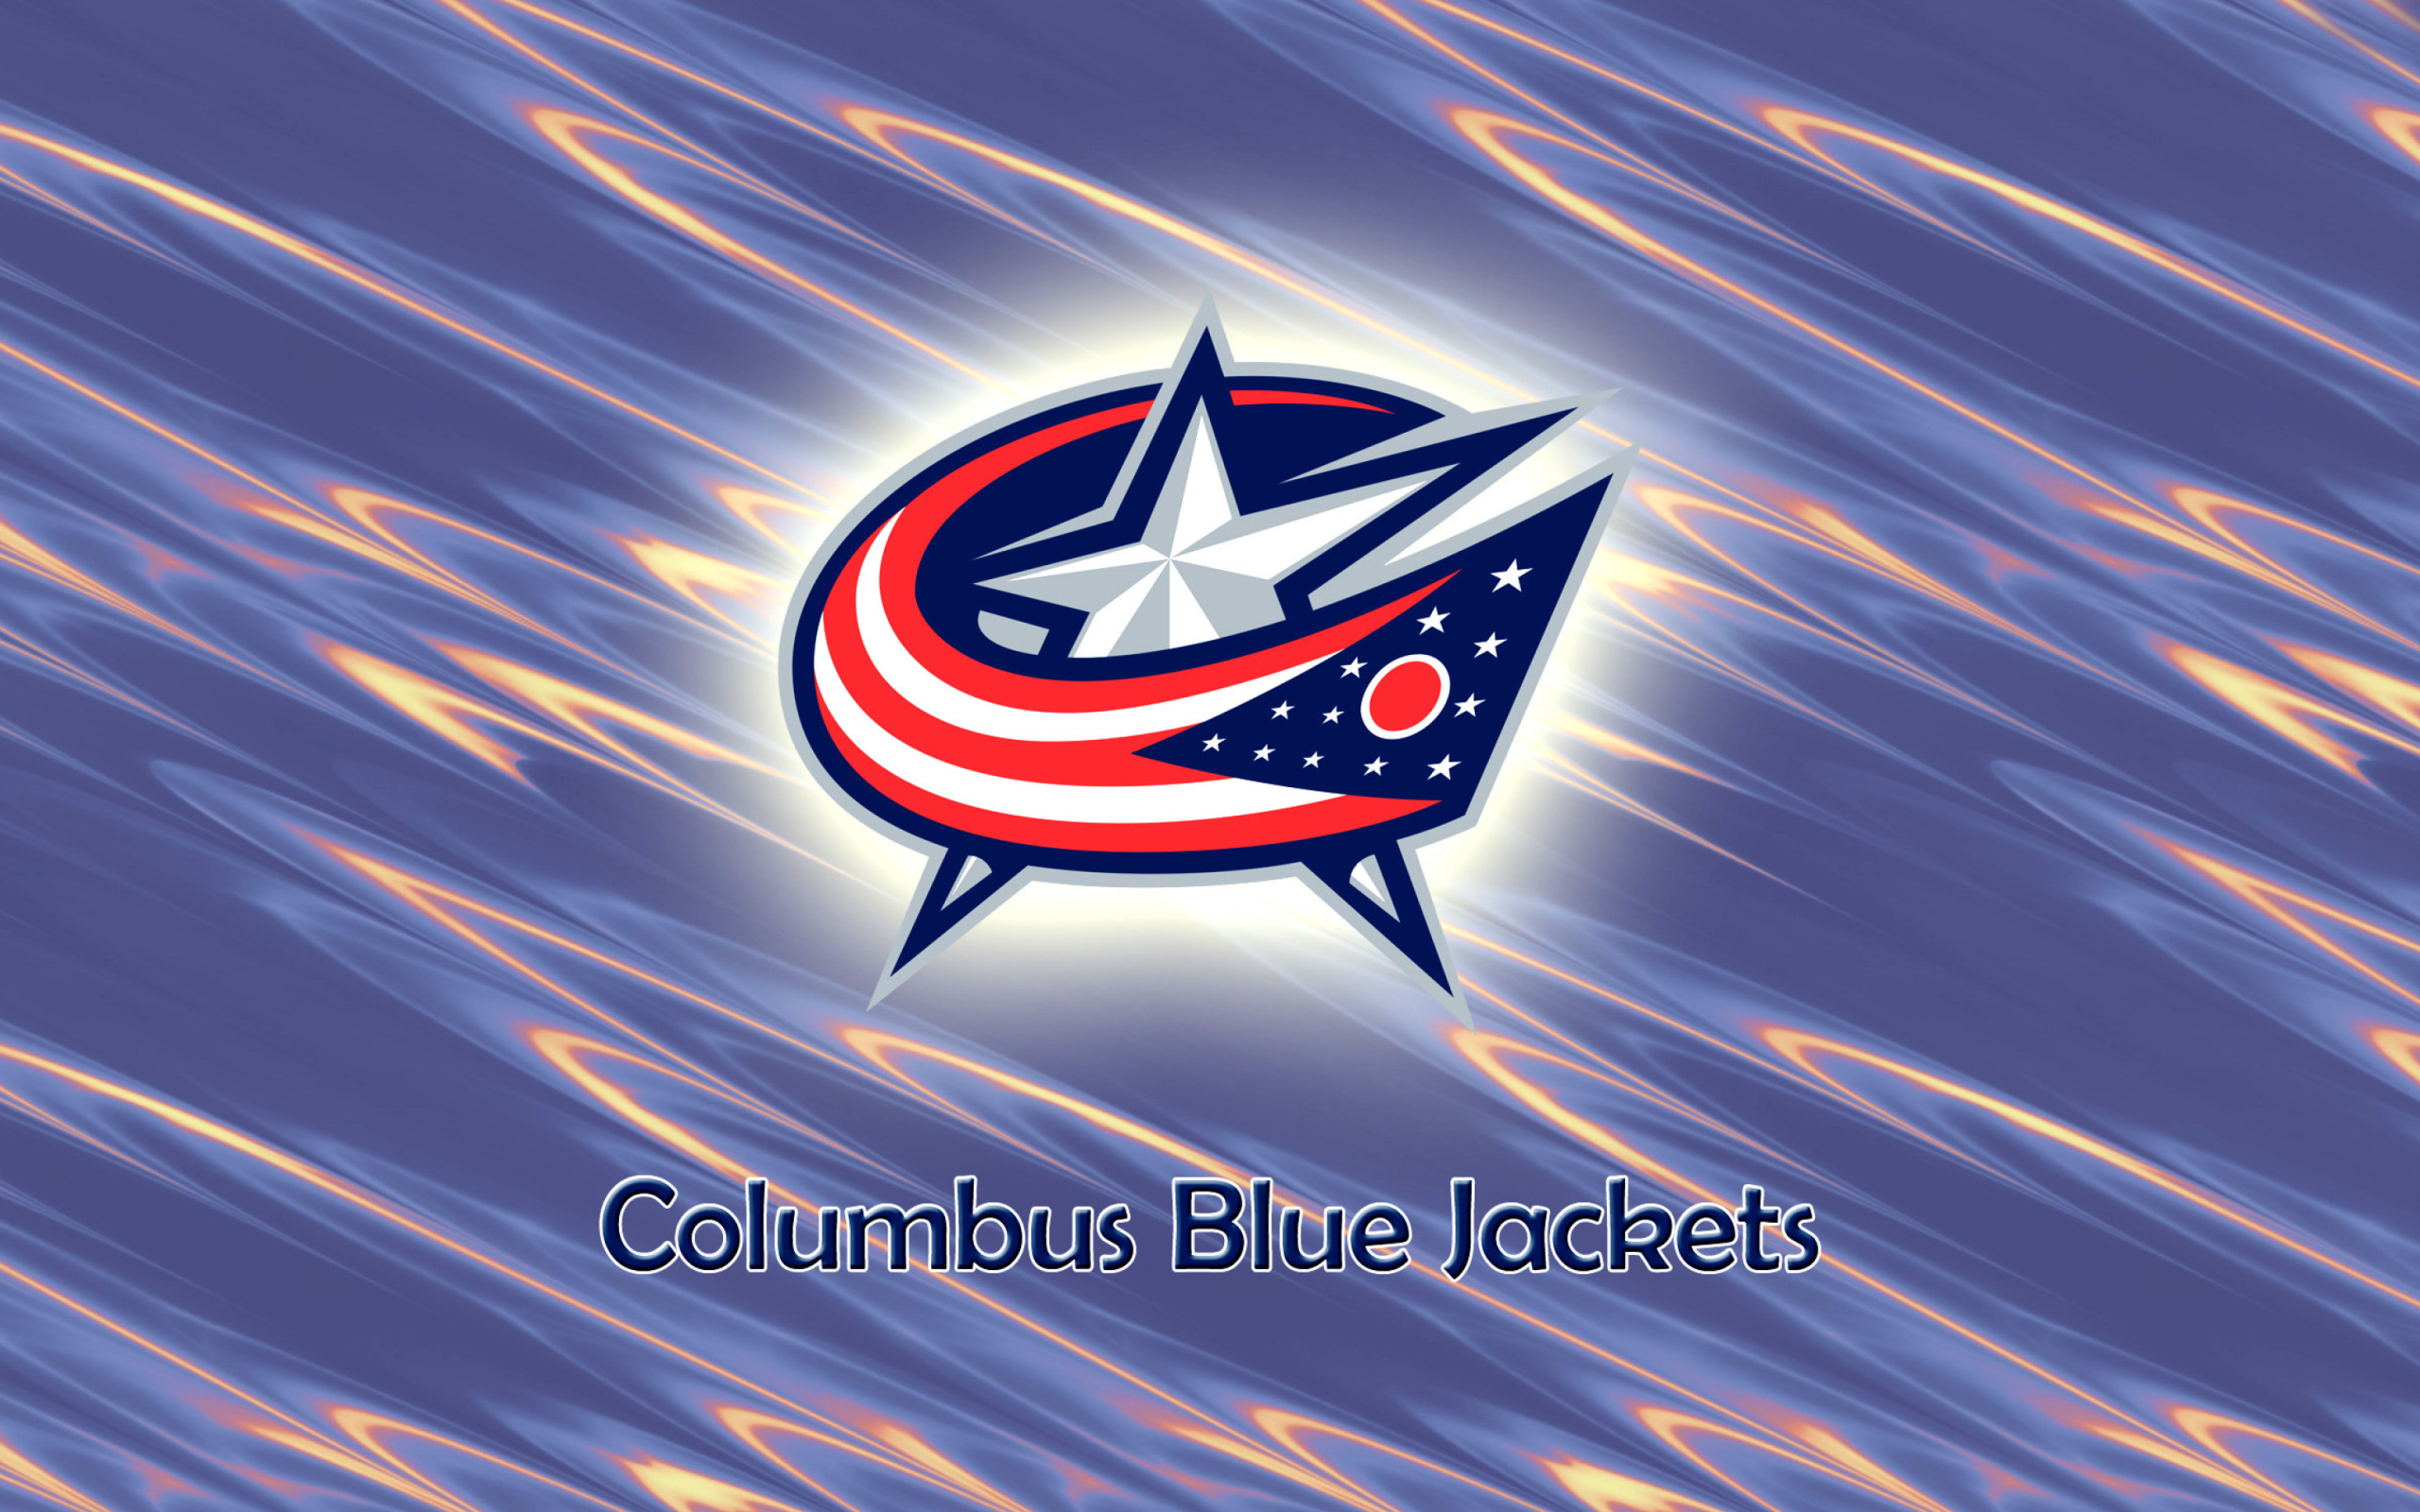 Columbus Blue Jackets wallpaper 2560x1600